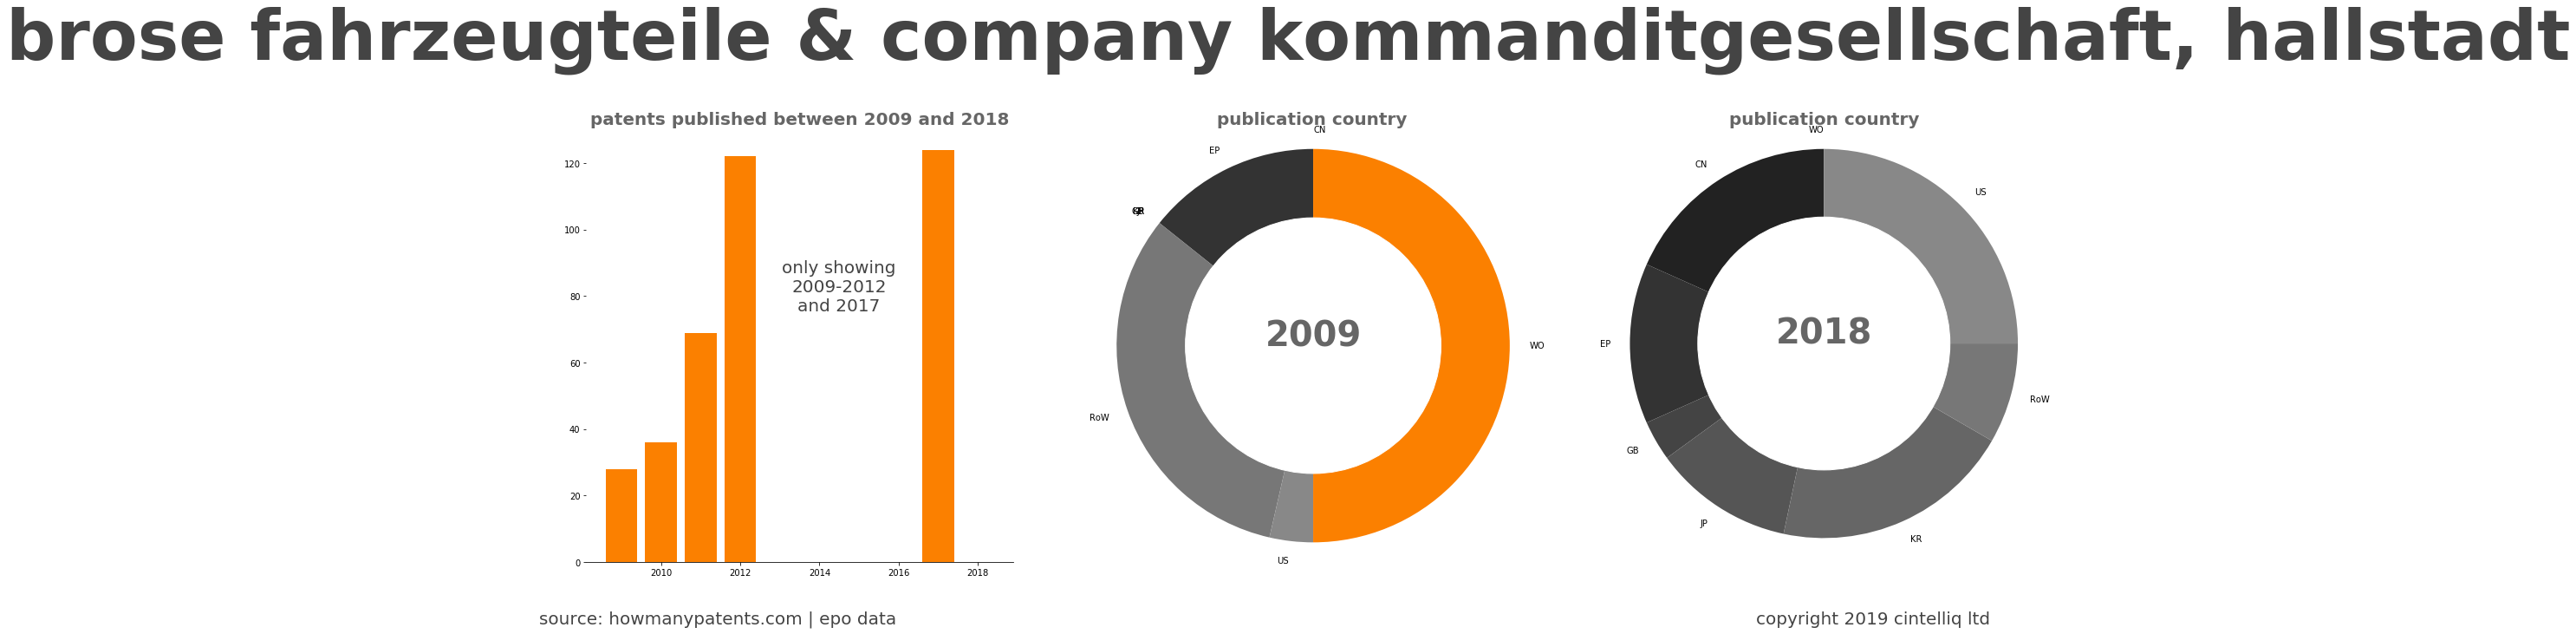 summary of patents for Brose Fahrzeugteile & Company Kommanditgesellschaft, Hallstadt